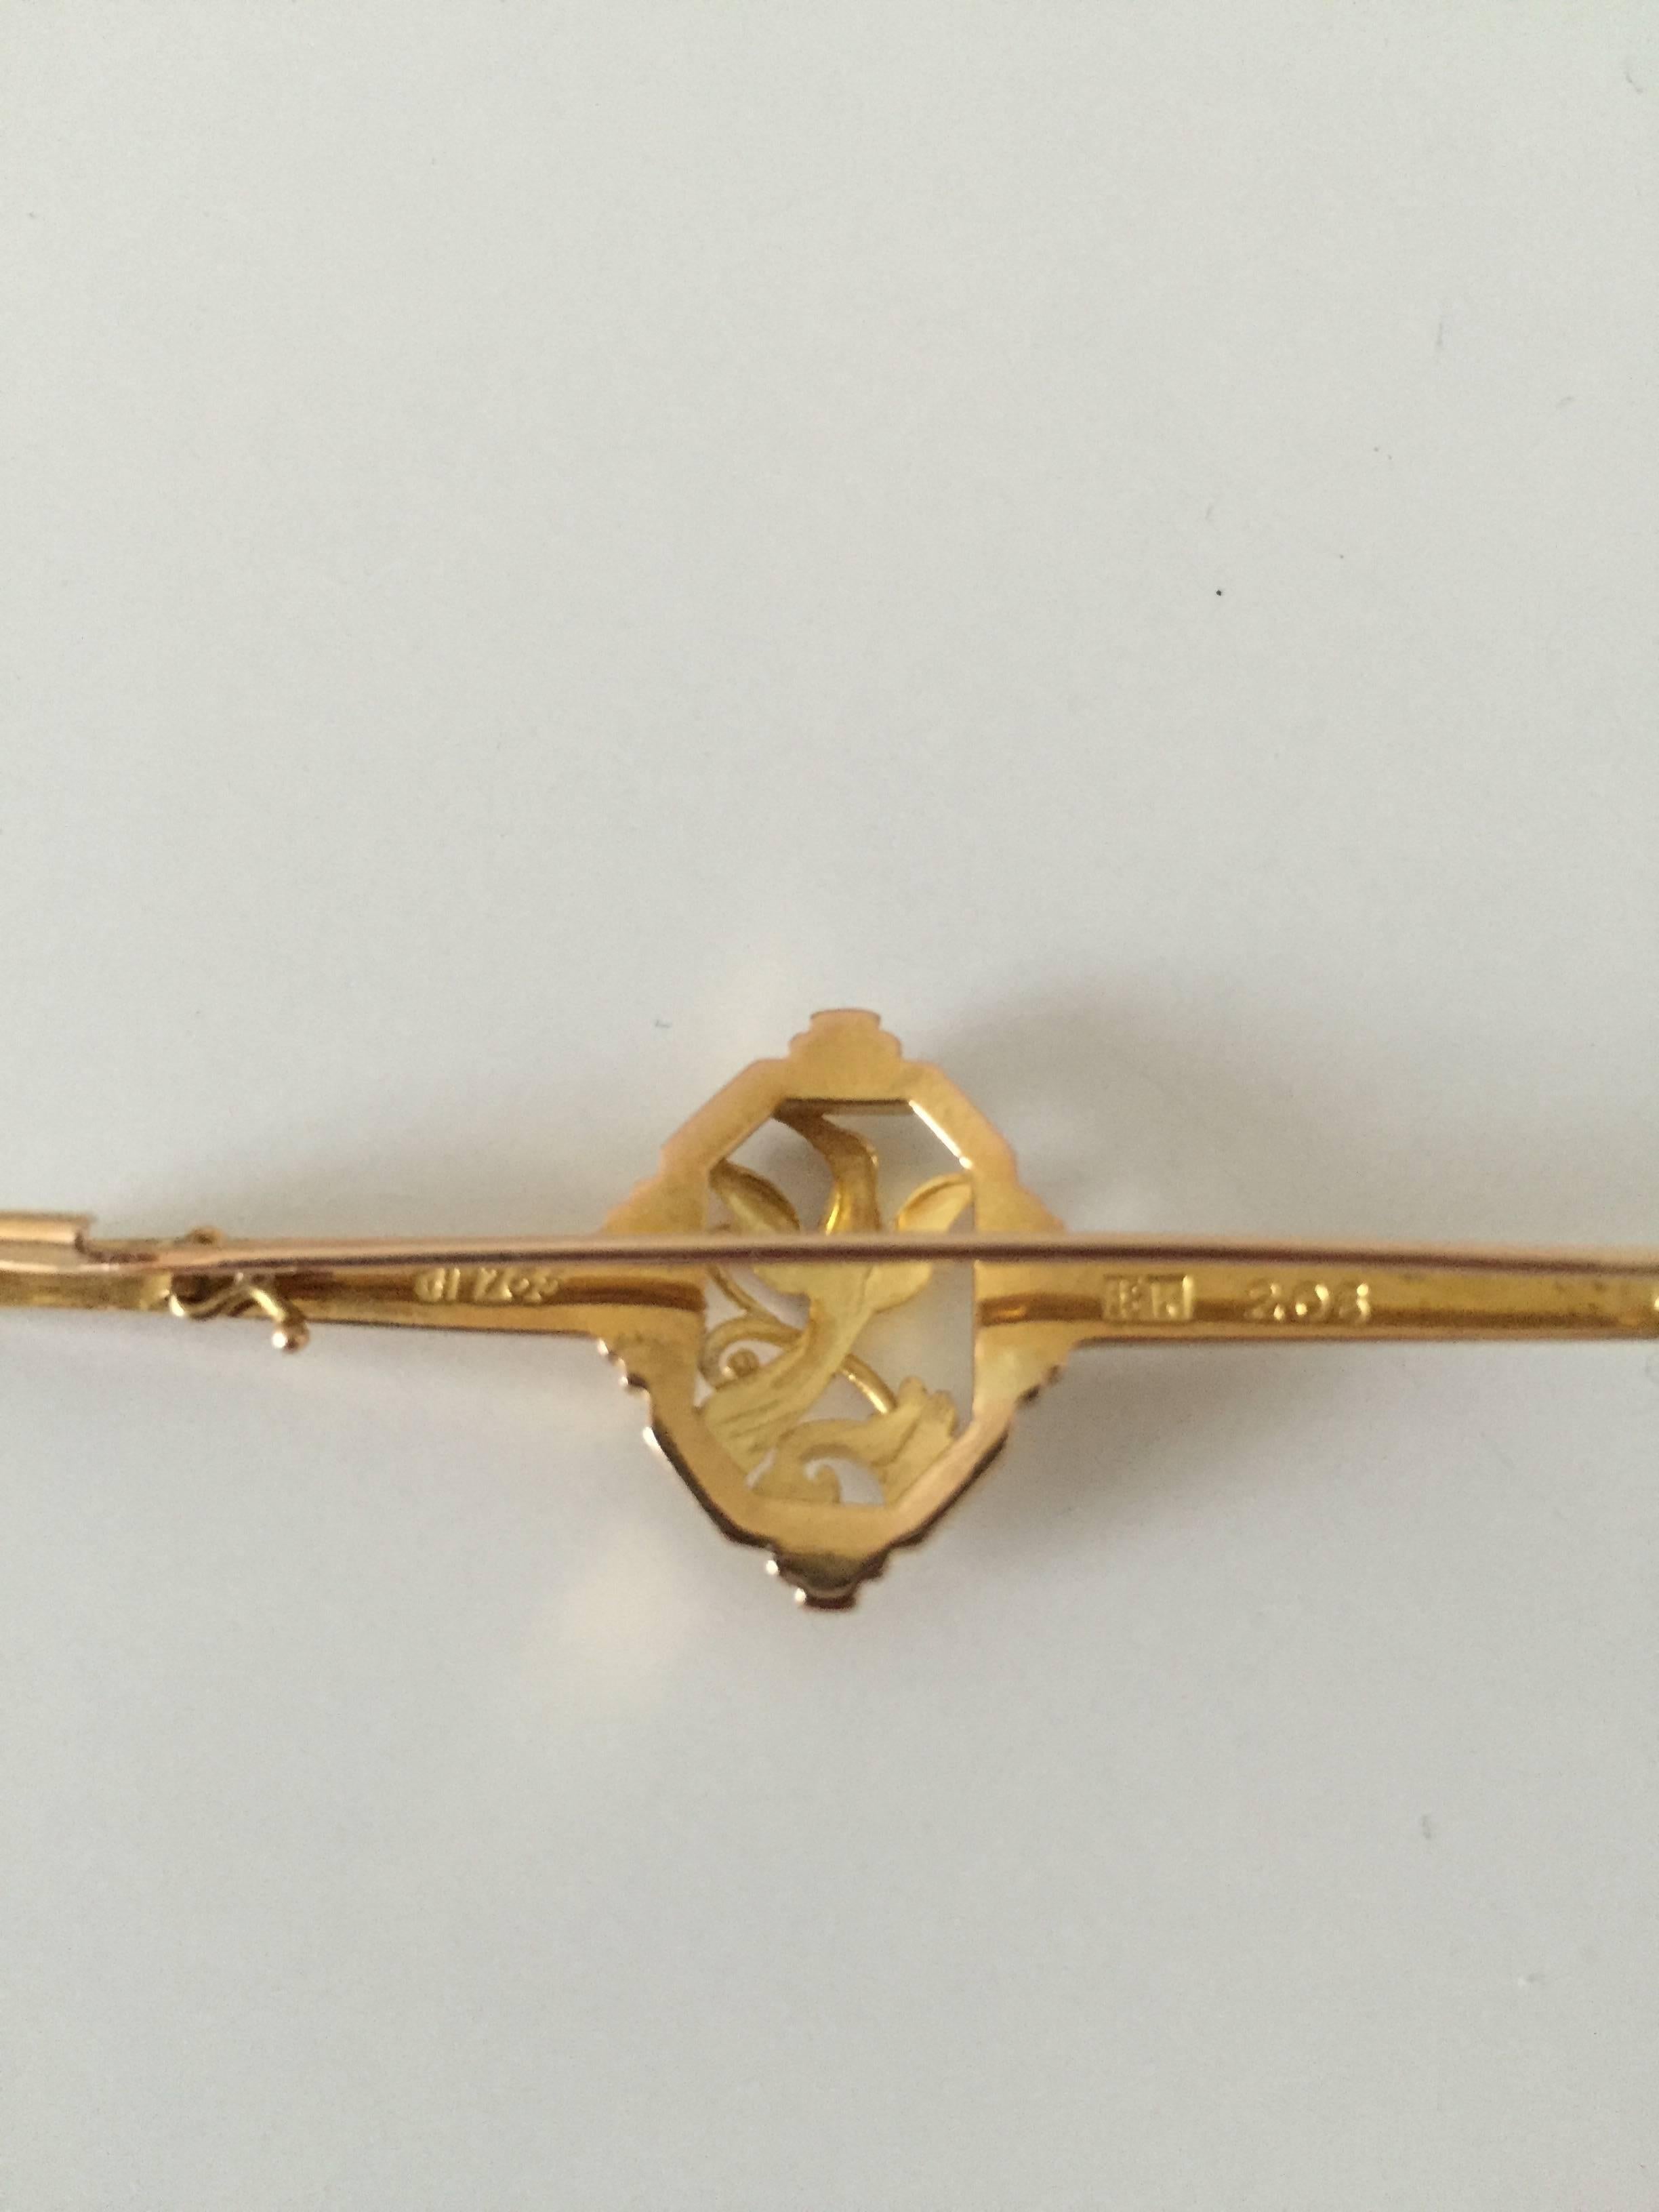 Georg Jensen 18-karat gold brooch #206. Dates 1908-1914. in perfect condition.

Measures 6.2 cm (2 7/16